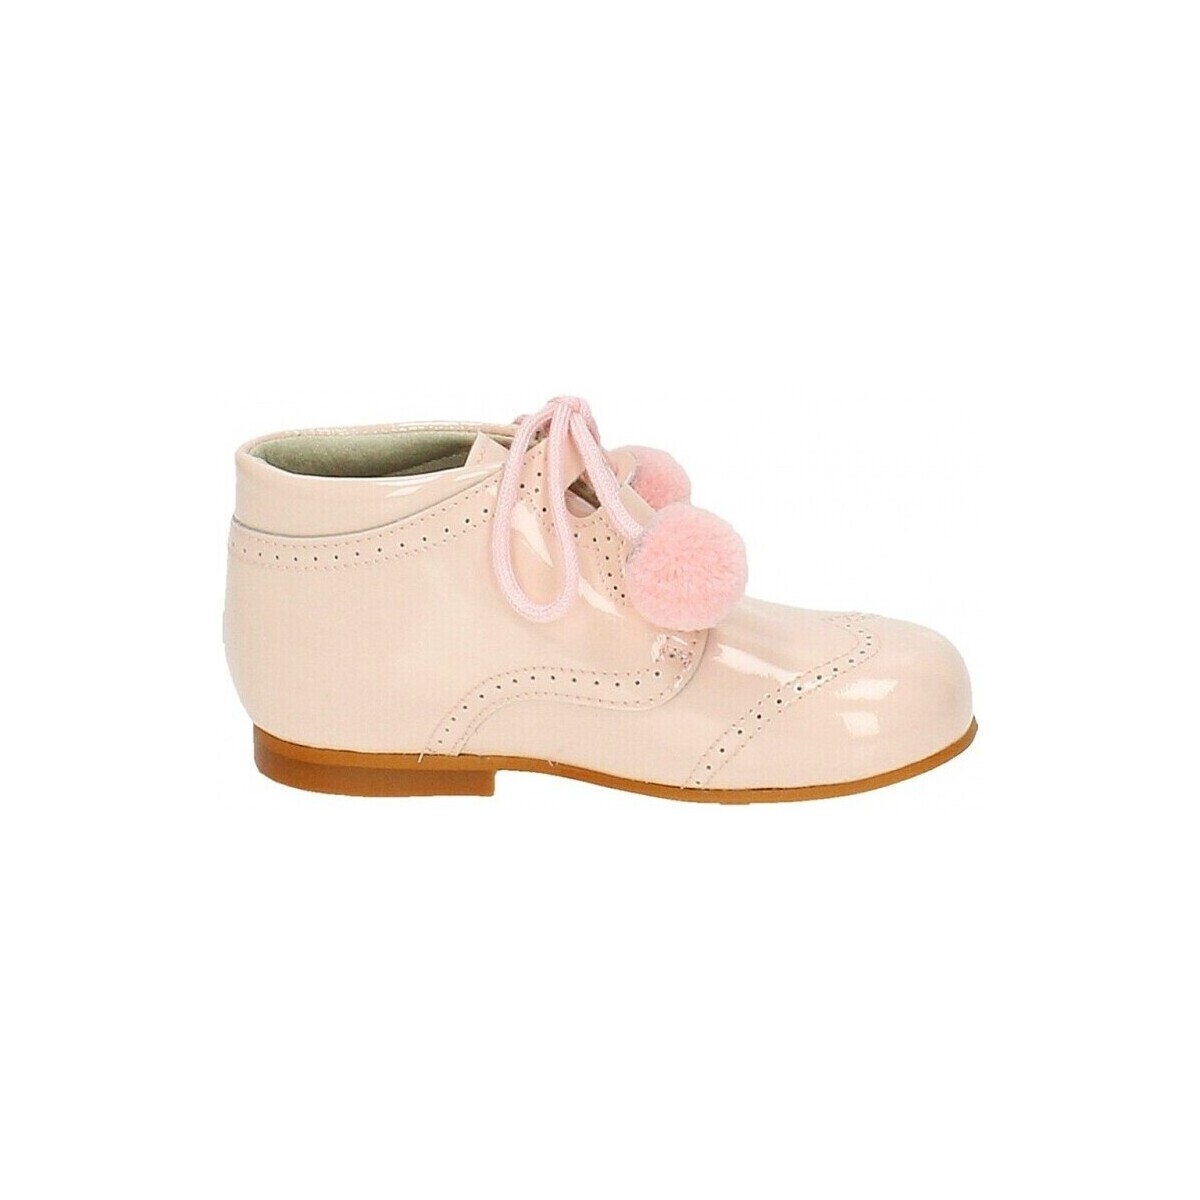 Čevlji  Škornji Bambineli 22608-18 Rožnata